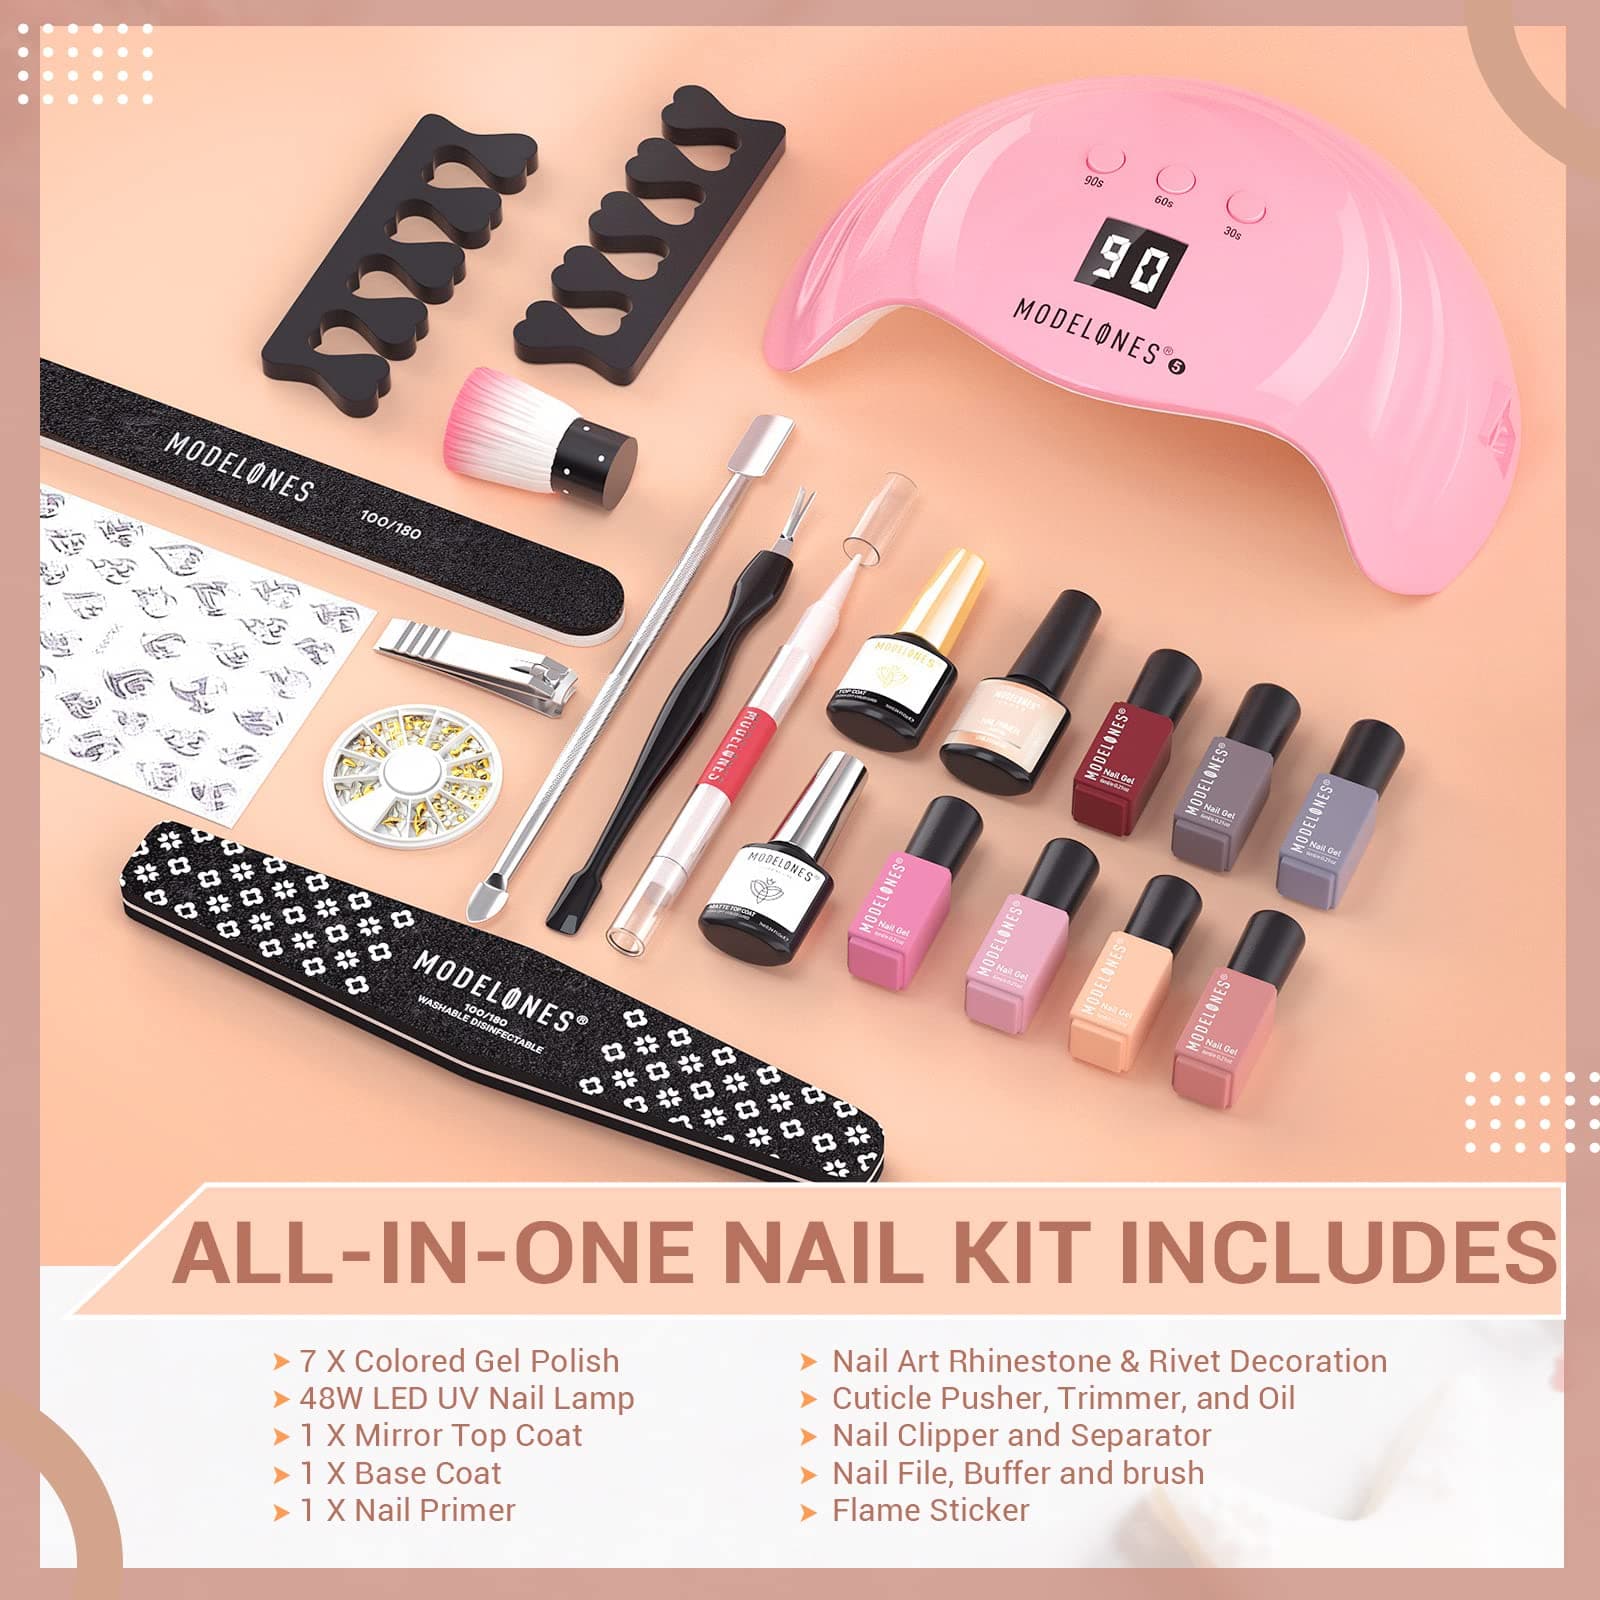 7 Colors Nail Gel Polish Starter Kit【US ONLY】 - MODELONES.com